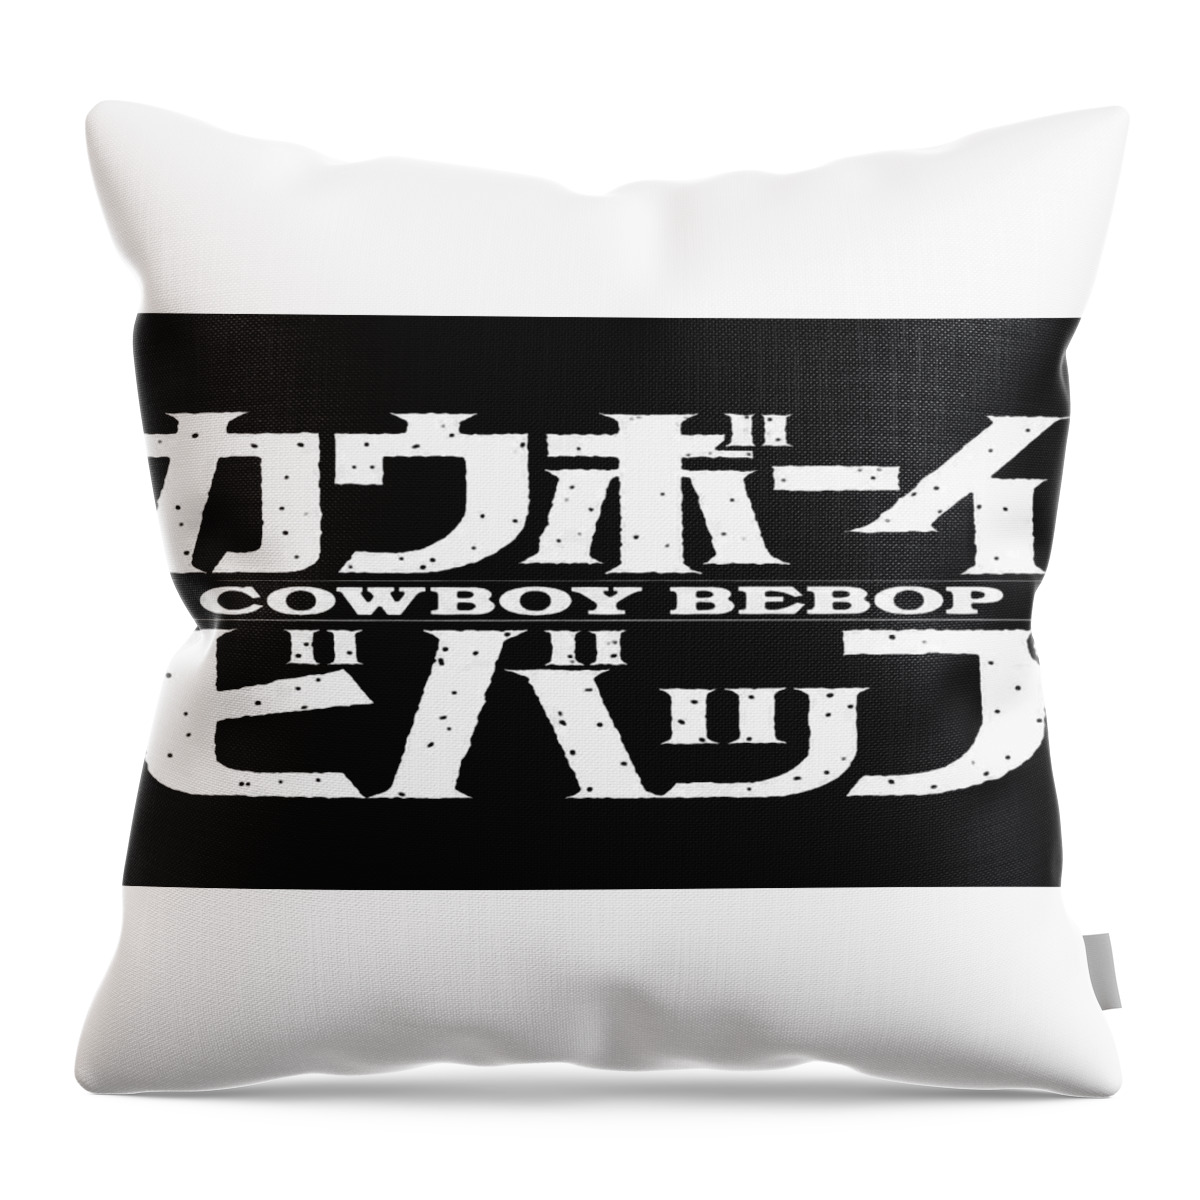 Cowboy Bebop Throw Pillow featuring the digital art Cowboy Bebop #1 by Maye Loeser